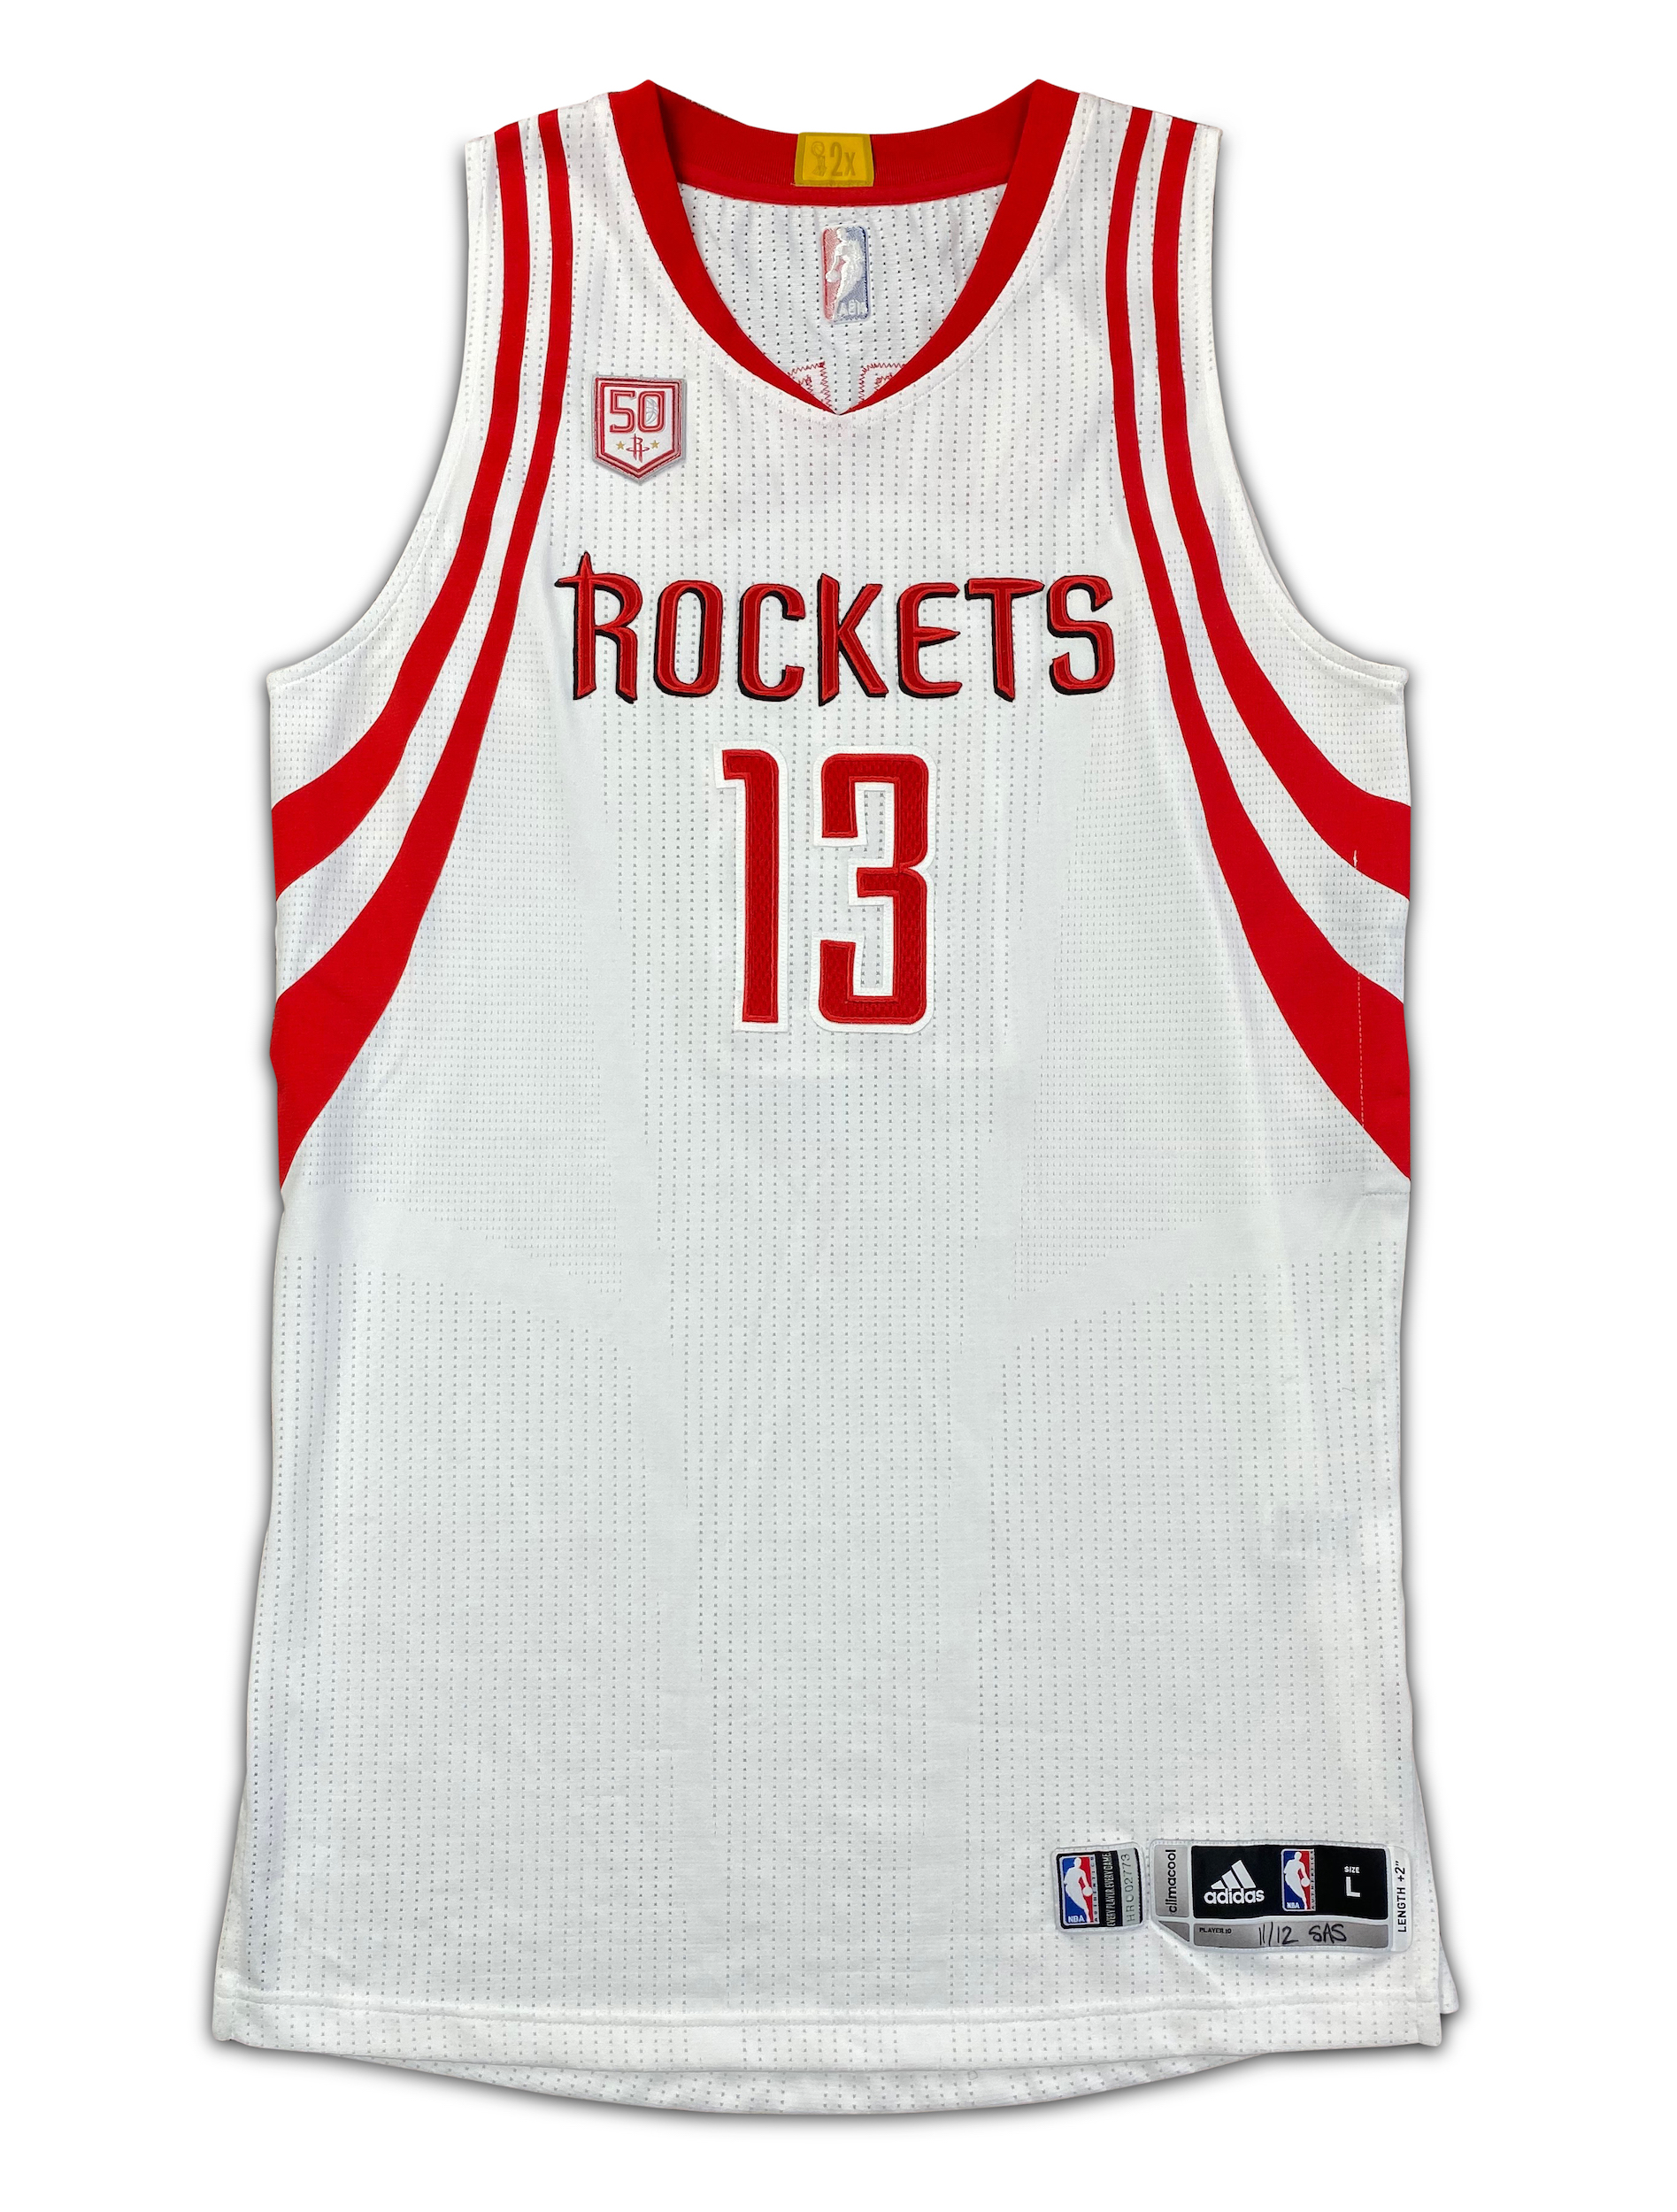 Adidas NBA James Harden Houston Rockets R30 Pro Cut Team Issue